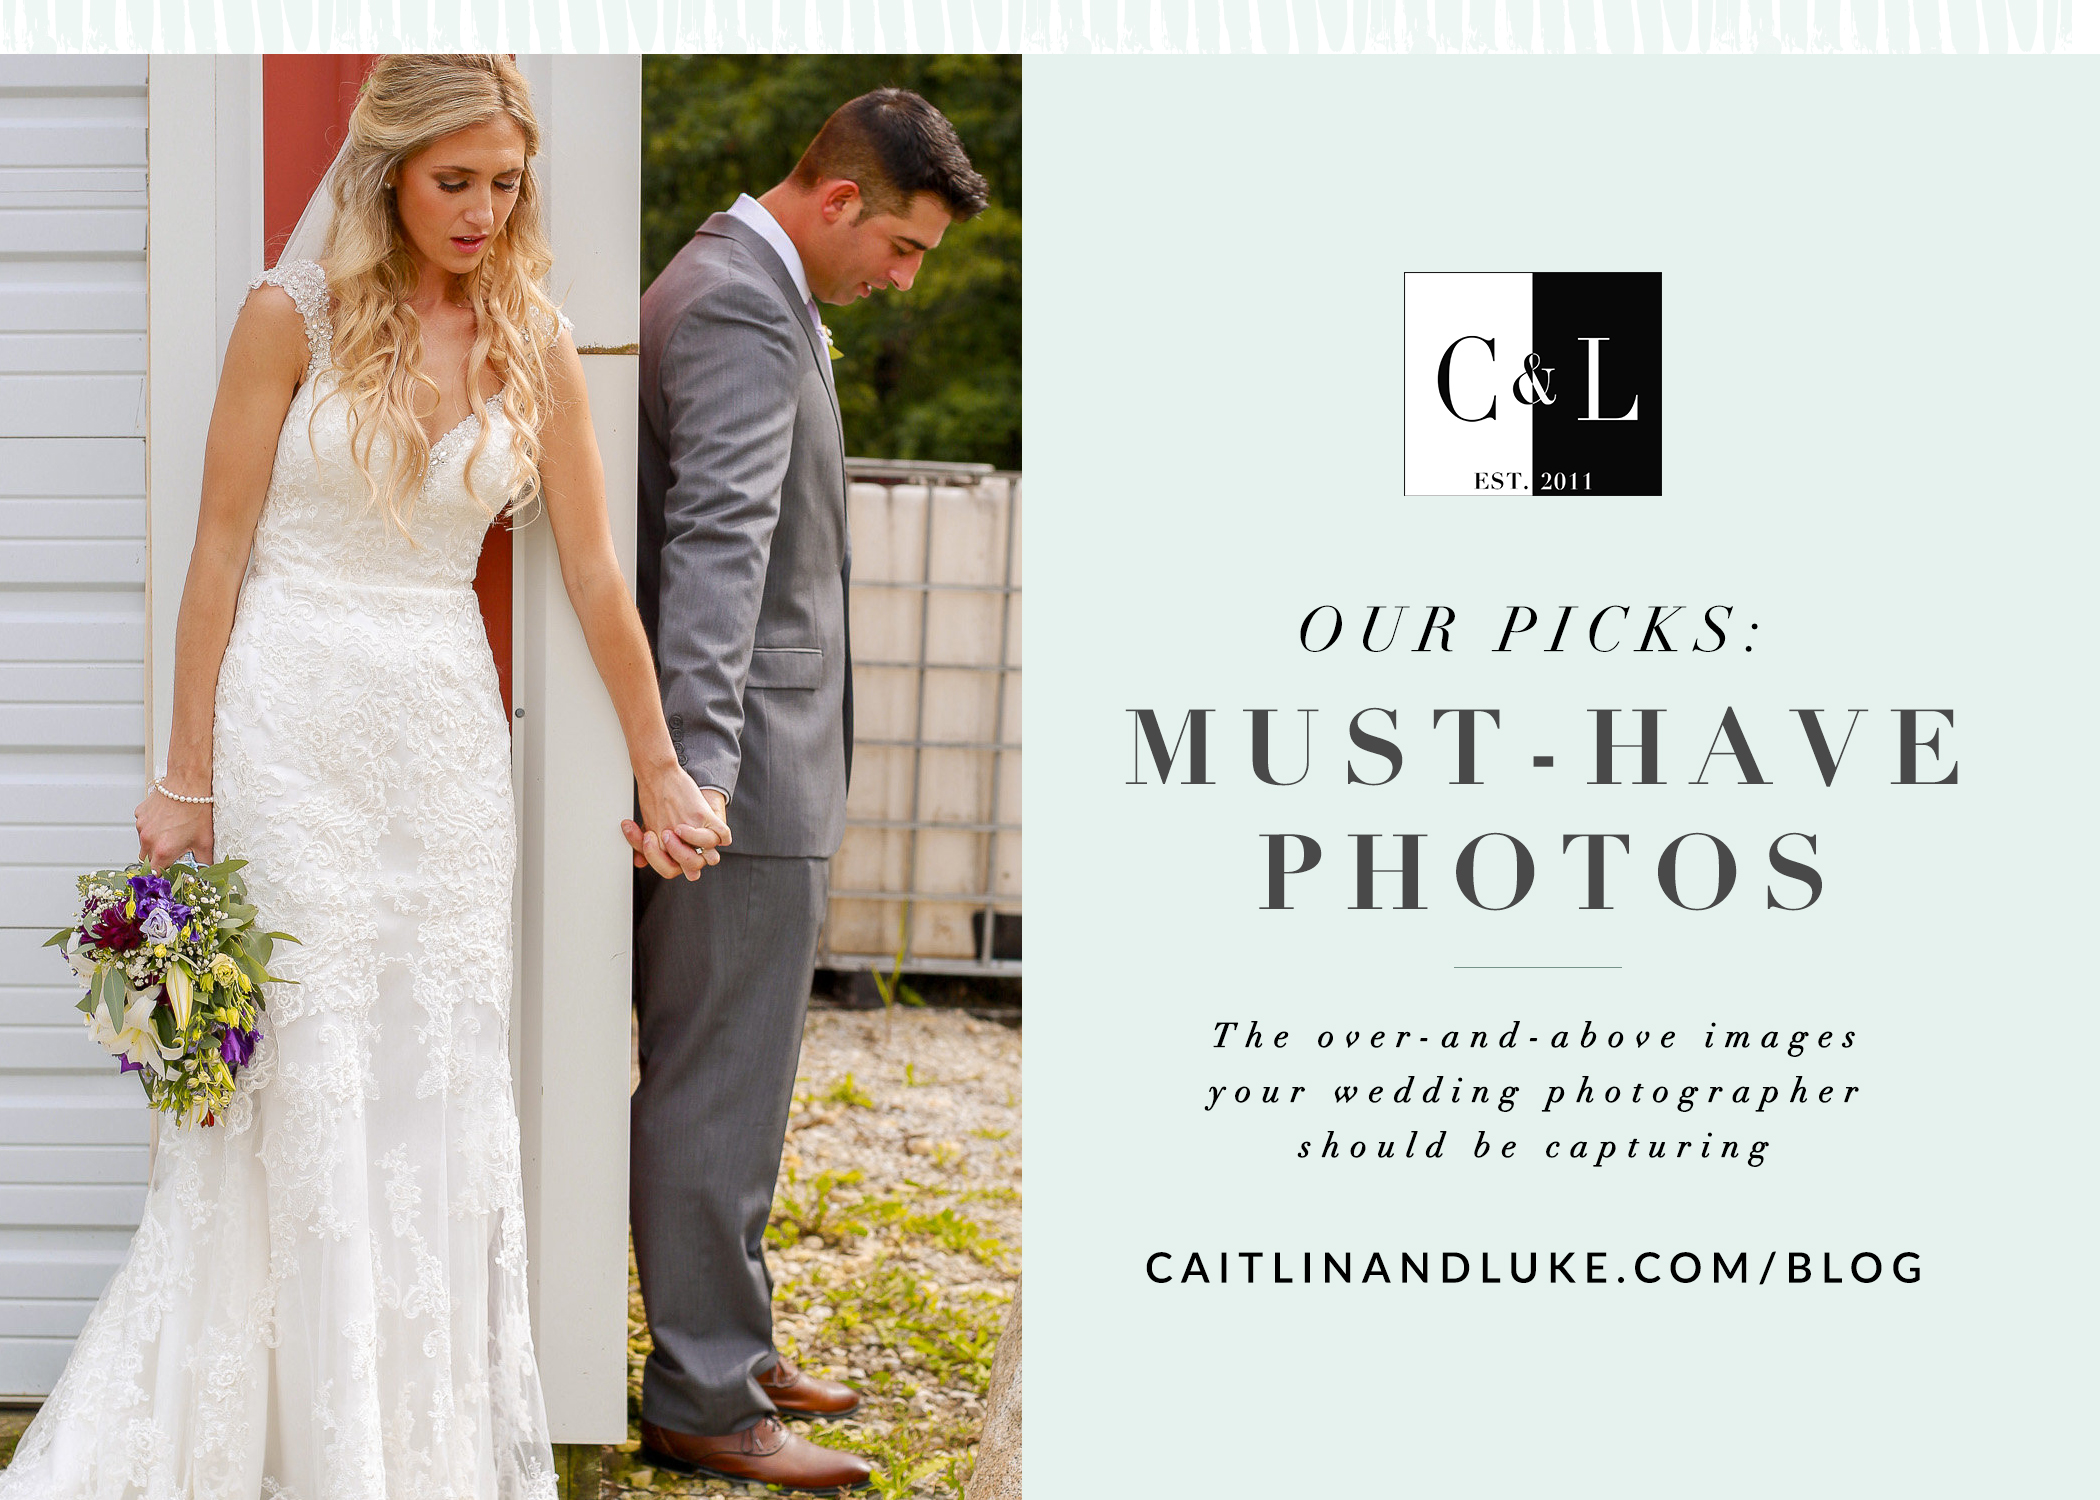 5 Must-Have Shots Your Wedding Photographer Should Capture